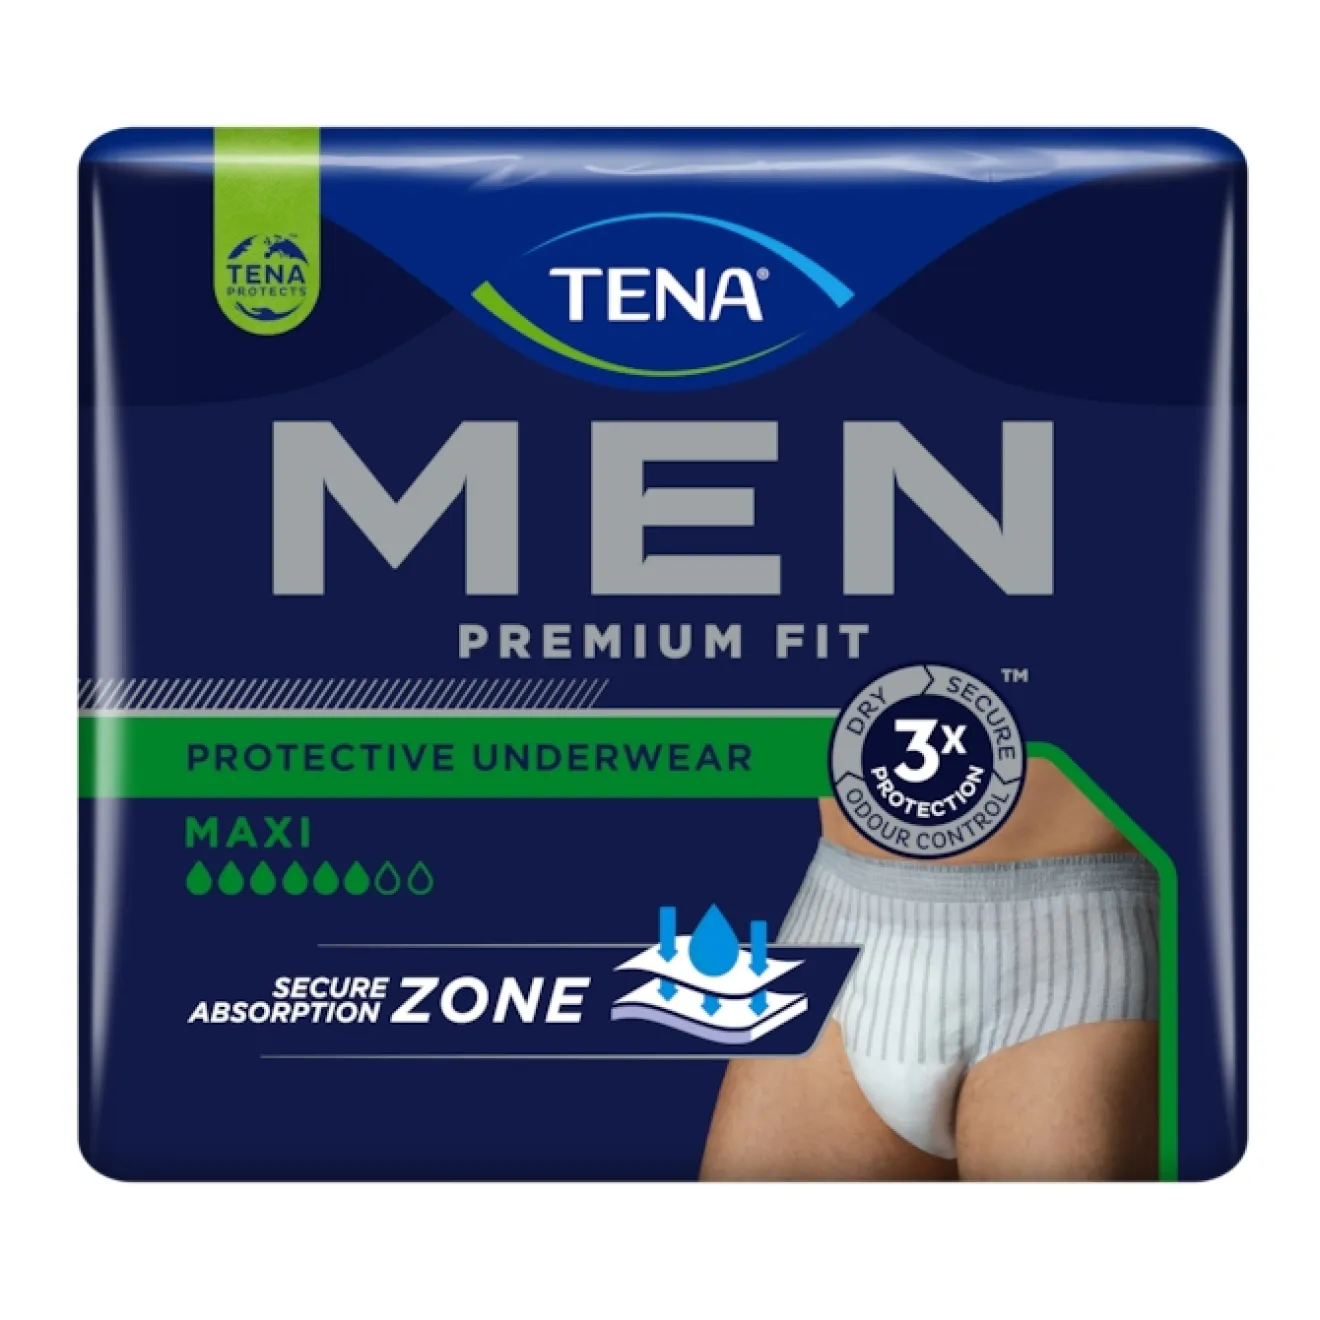 TENA MEN Premium Fit Inkontinenz Pants maxi L/XL 10 ST